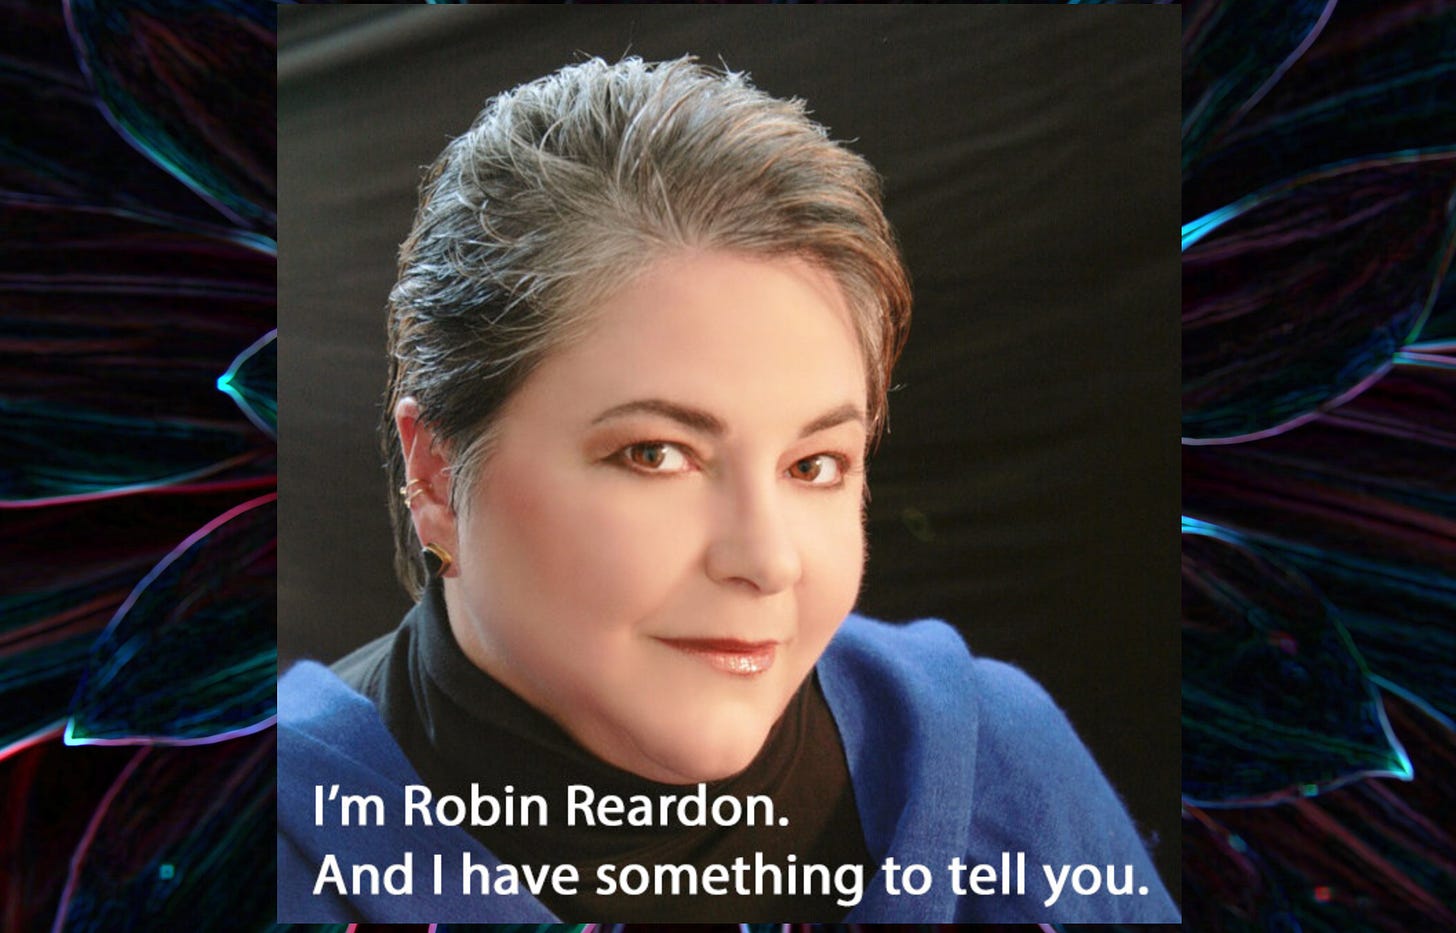 Robin Reardon website home page image